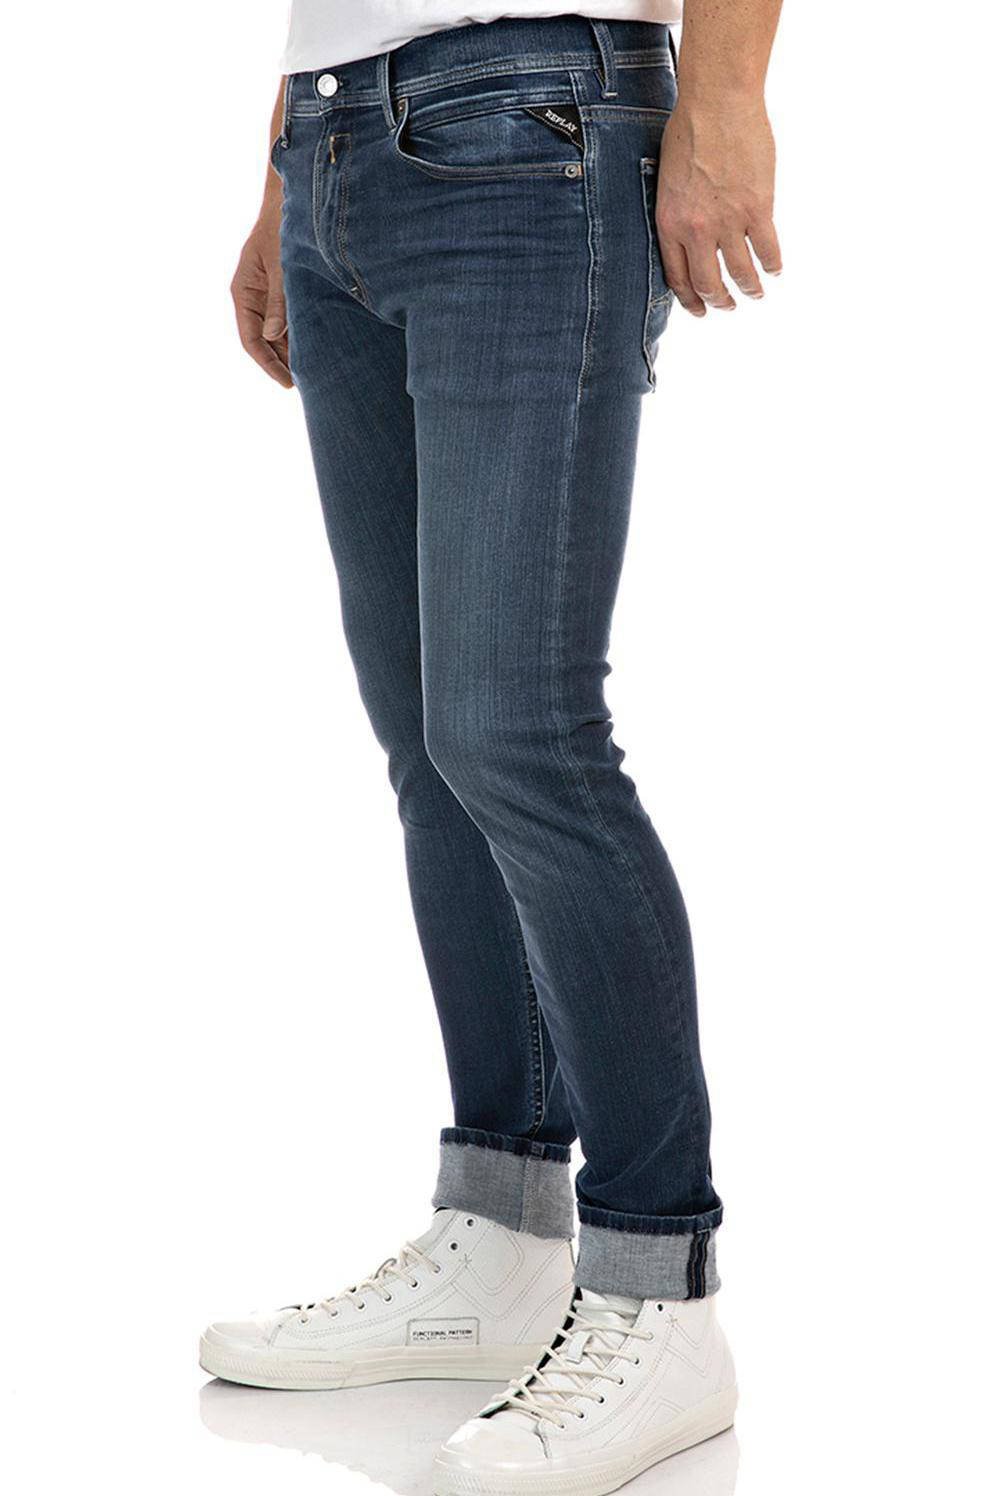 Replay Denim Skinny Jeans Anbass in het Blauw voor heren Heren Kleding voor voor Jeans voor Skinny jeans 